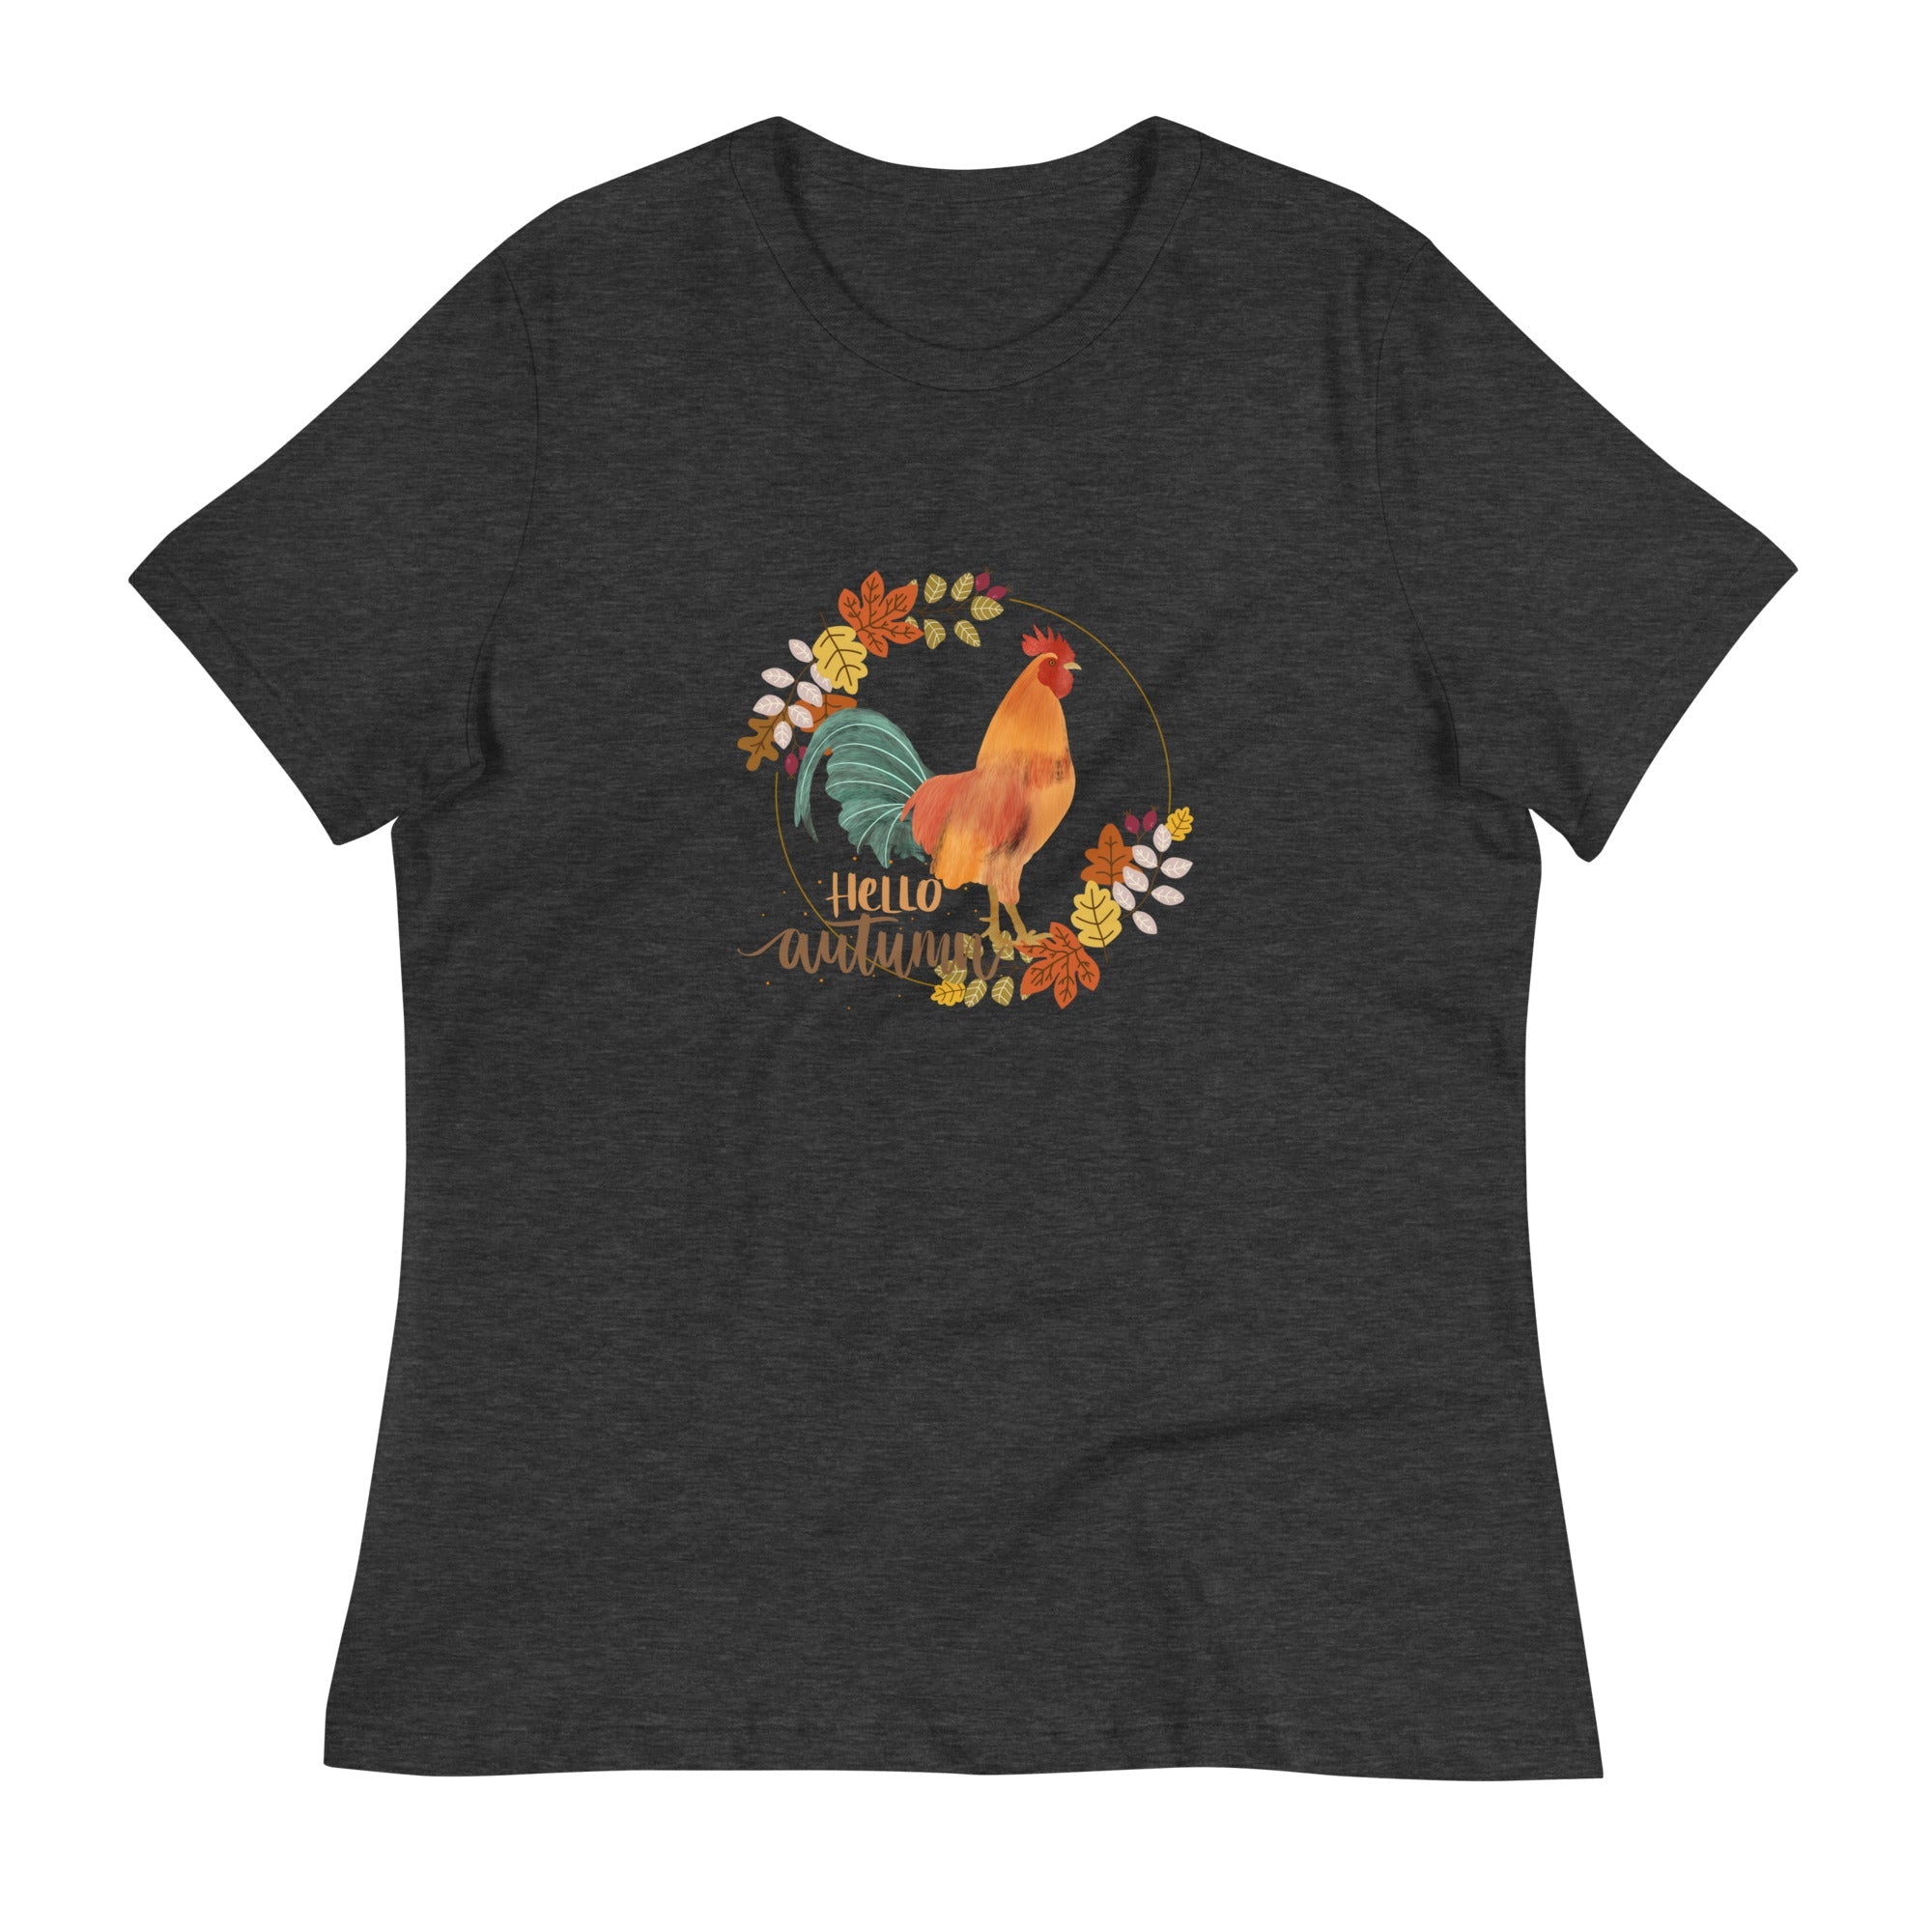 Hello Autumn Women's Relaxed T-Shirt - Cluck It All Farms